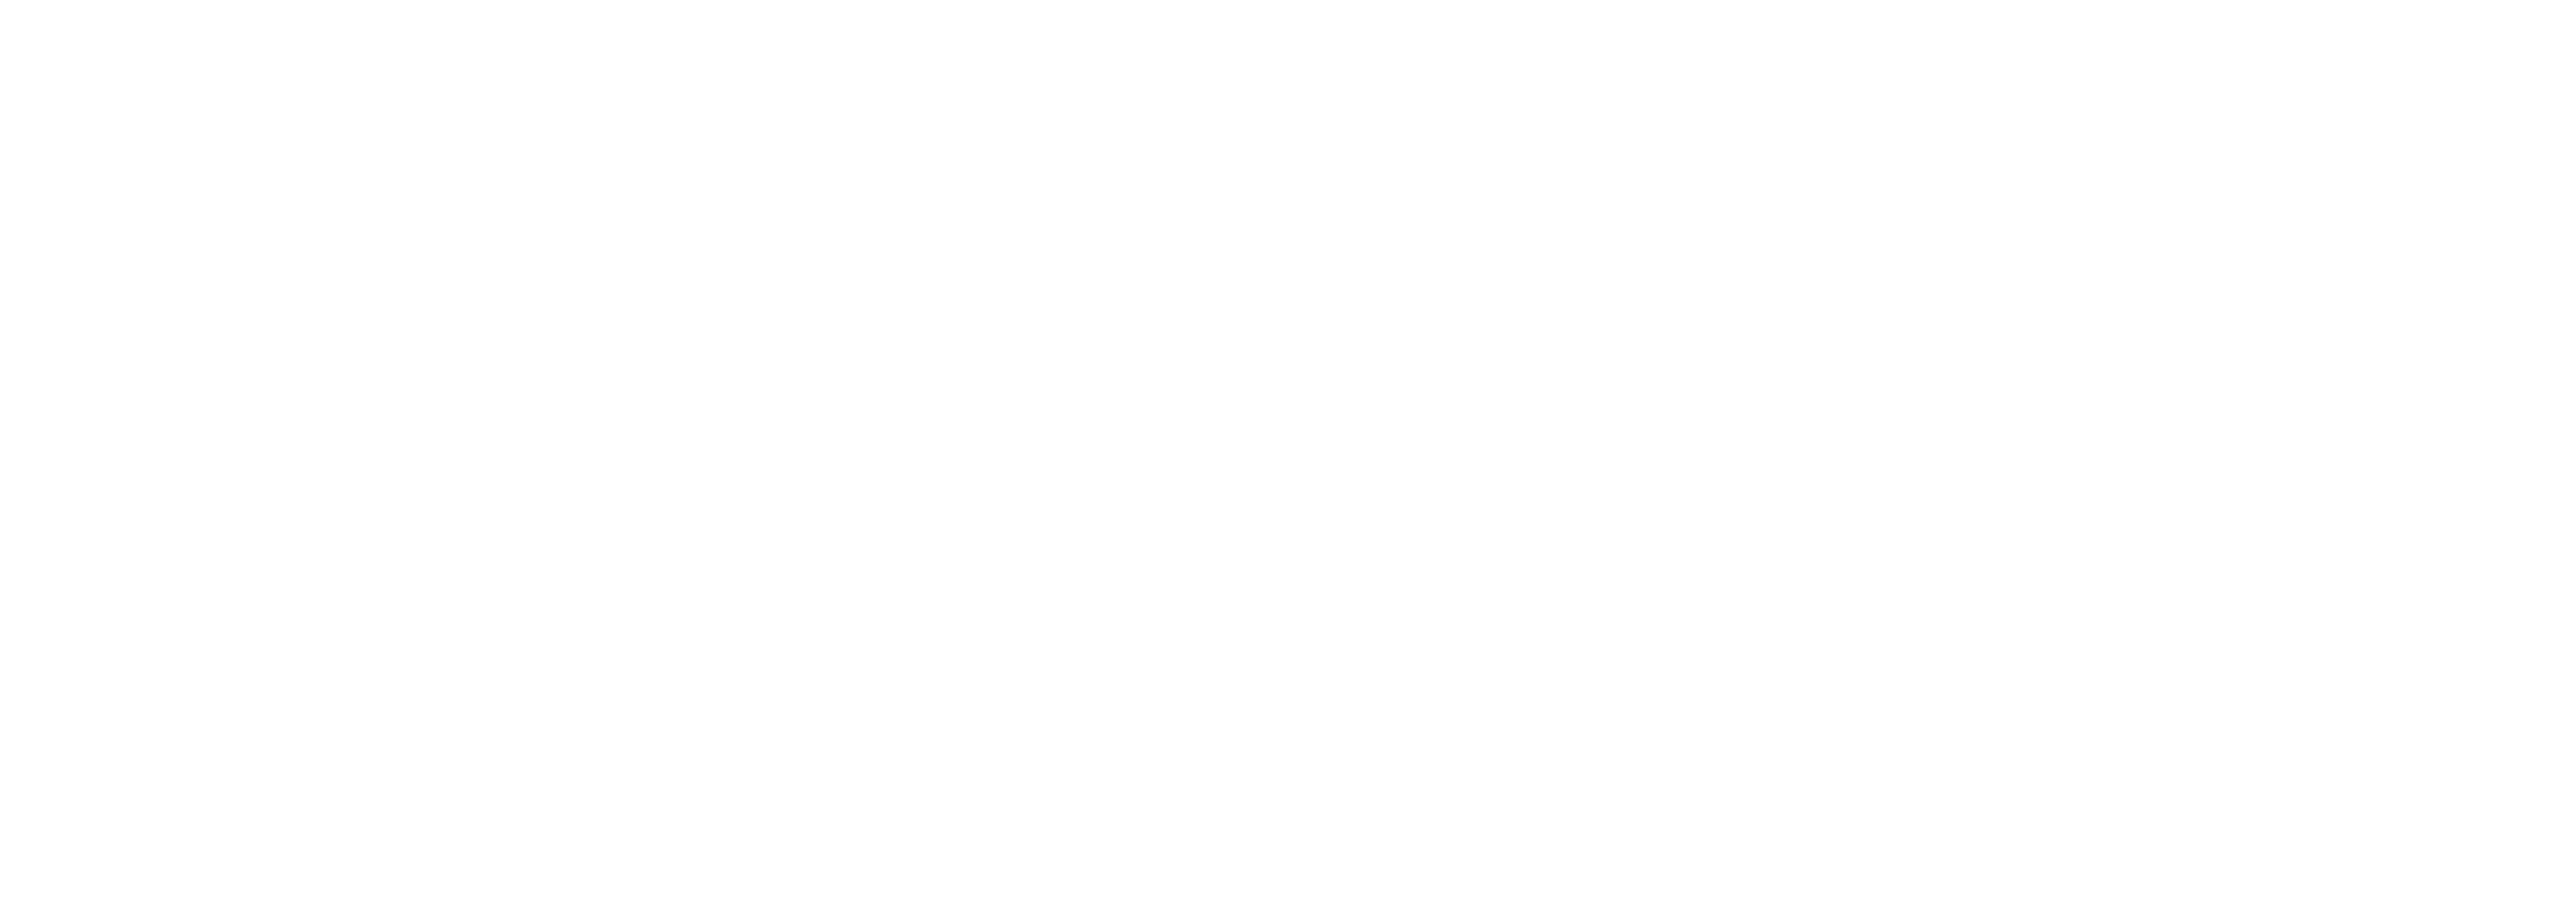 Snowflakes decoration png image. Clipart snowflake snowflake pattern